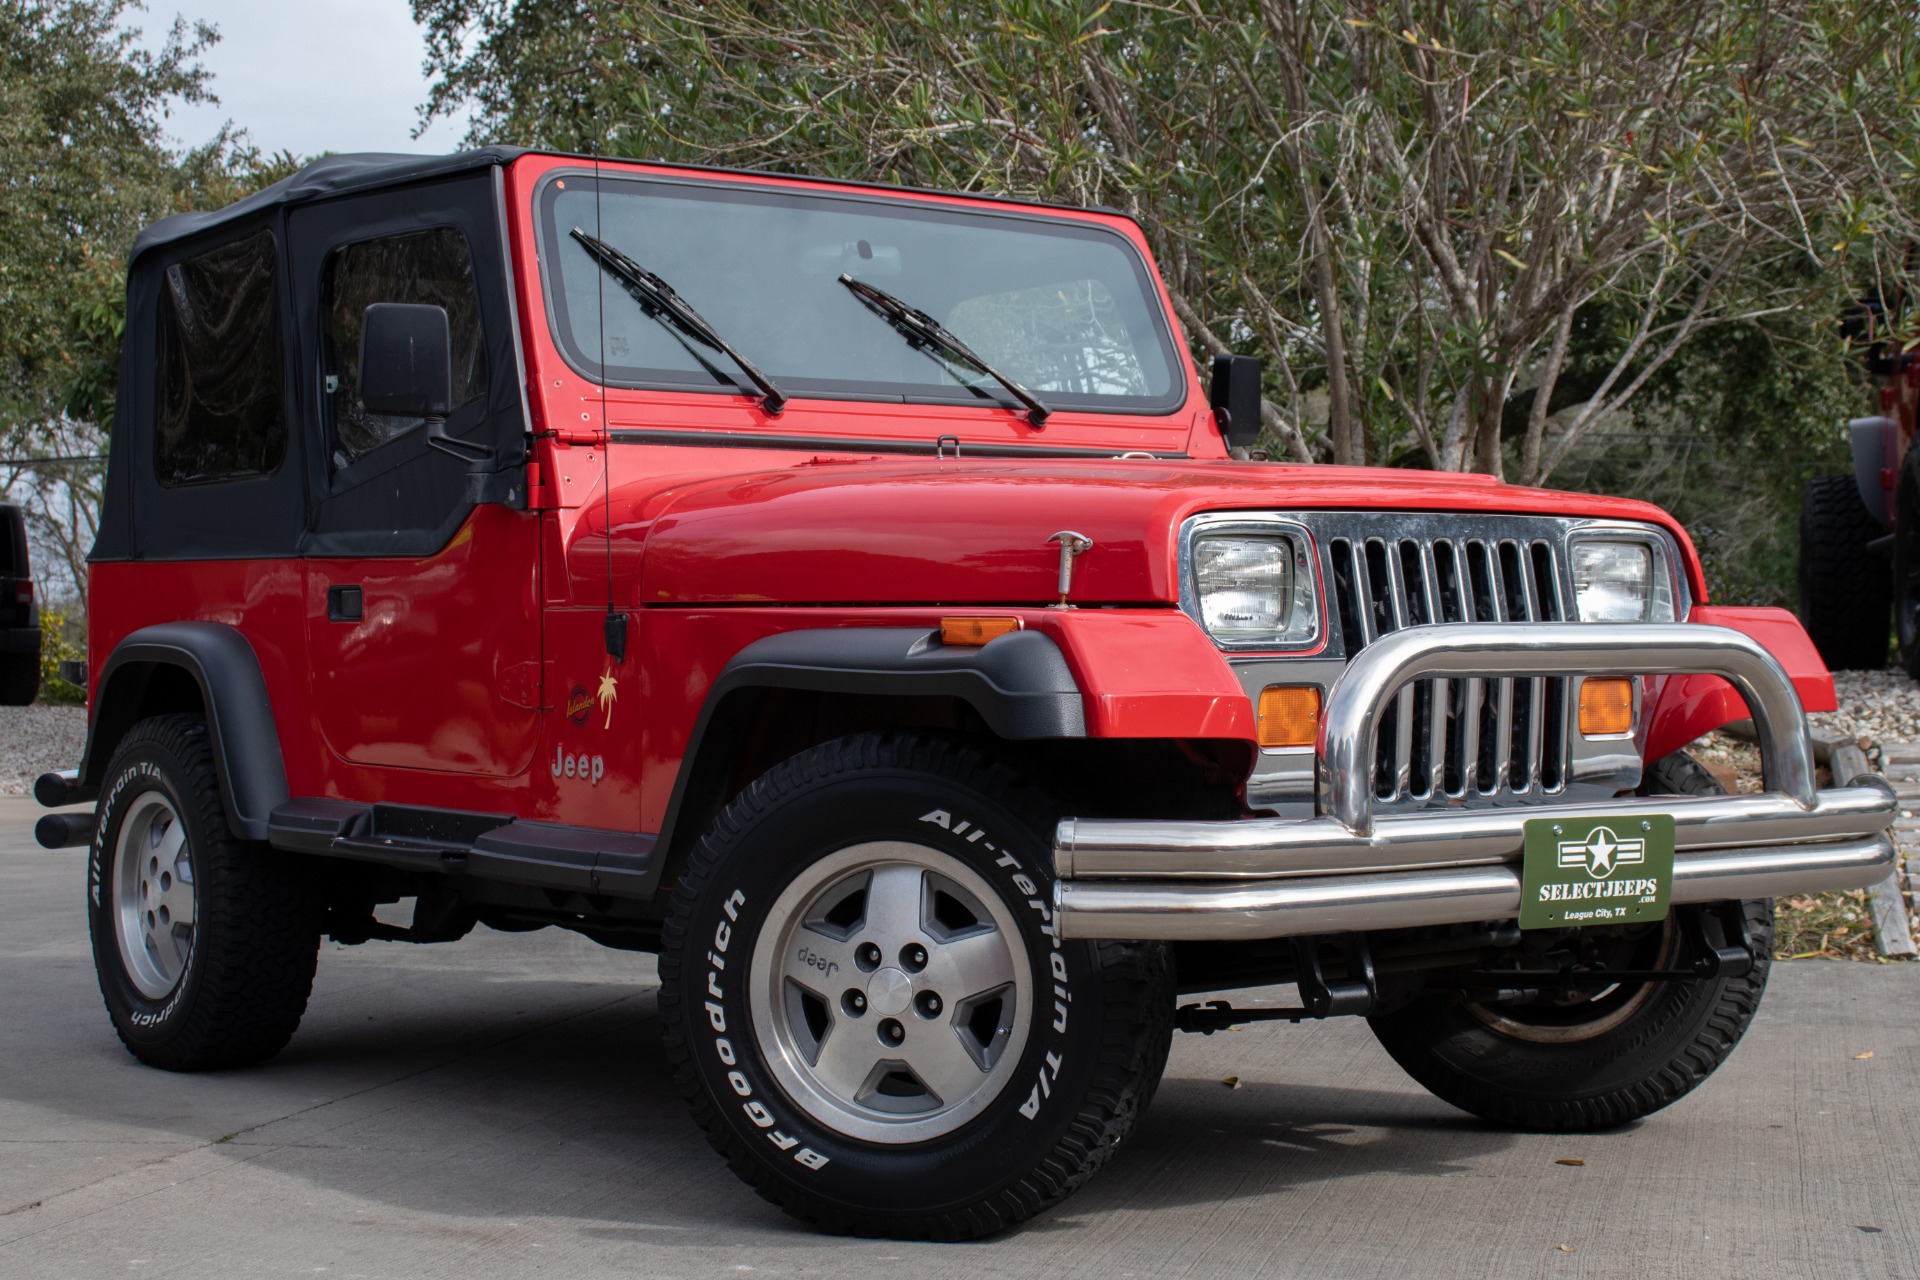 Used 1989 Jeep Wrangler Islander For Sale ($10,995) | Select Jeeps Inc.  Stock #125179